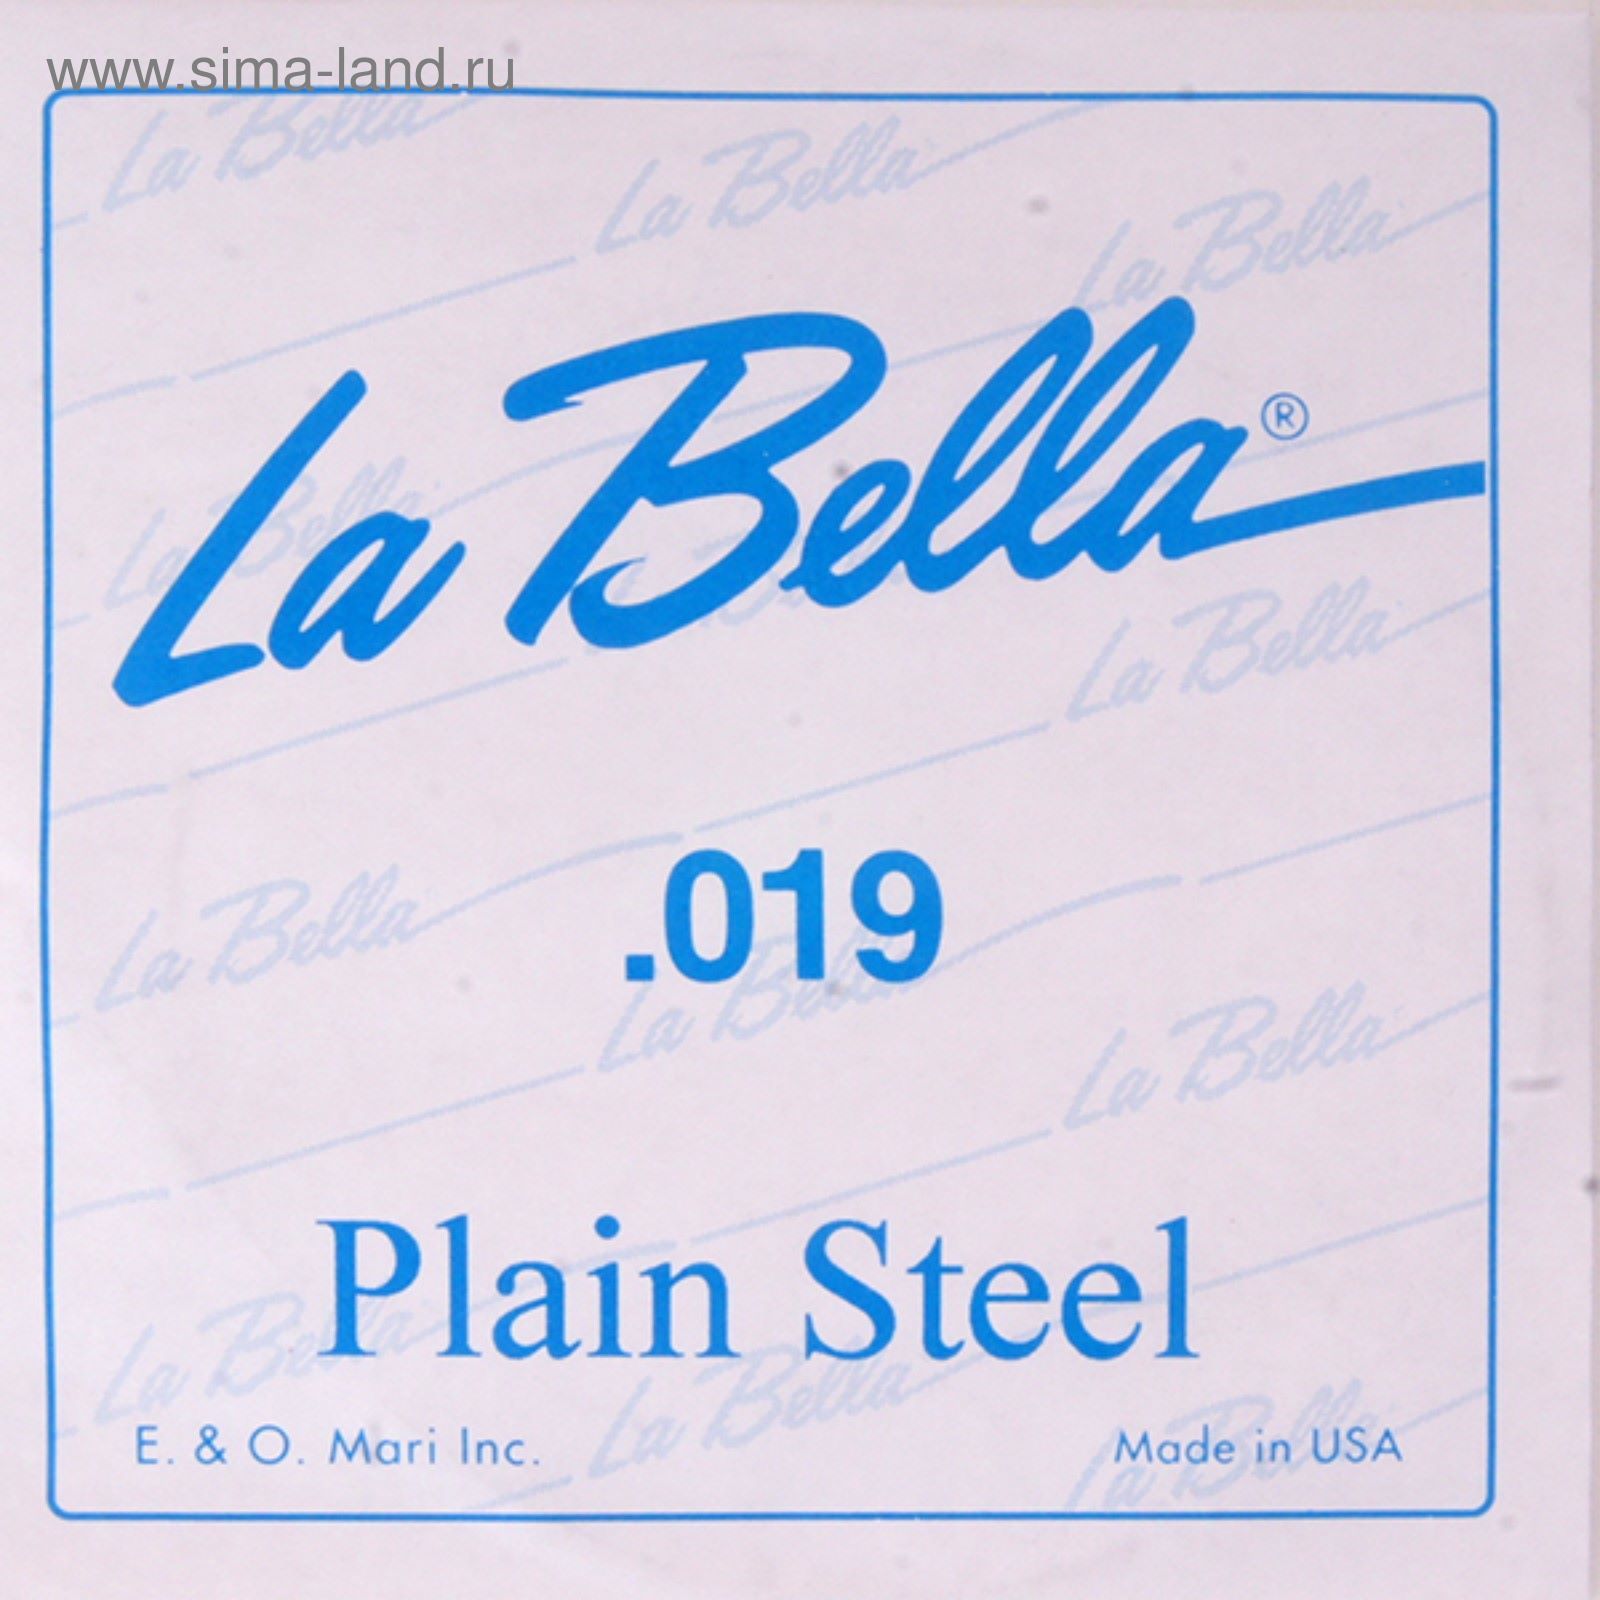 La Bella PS019 струна одинарная